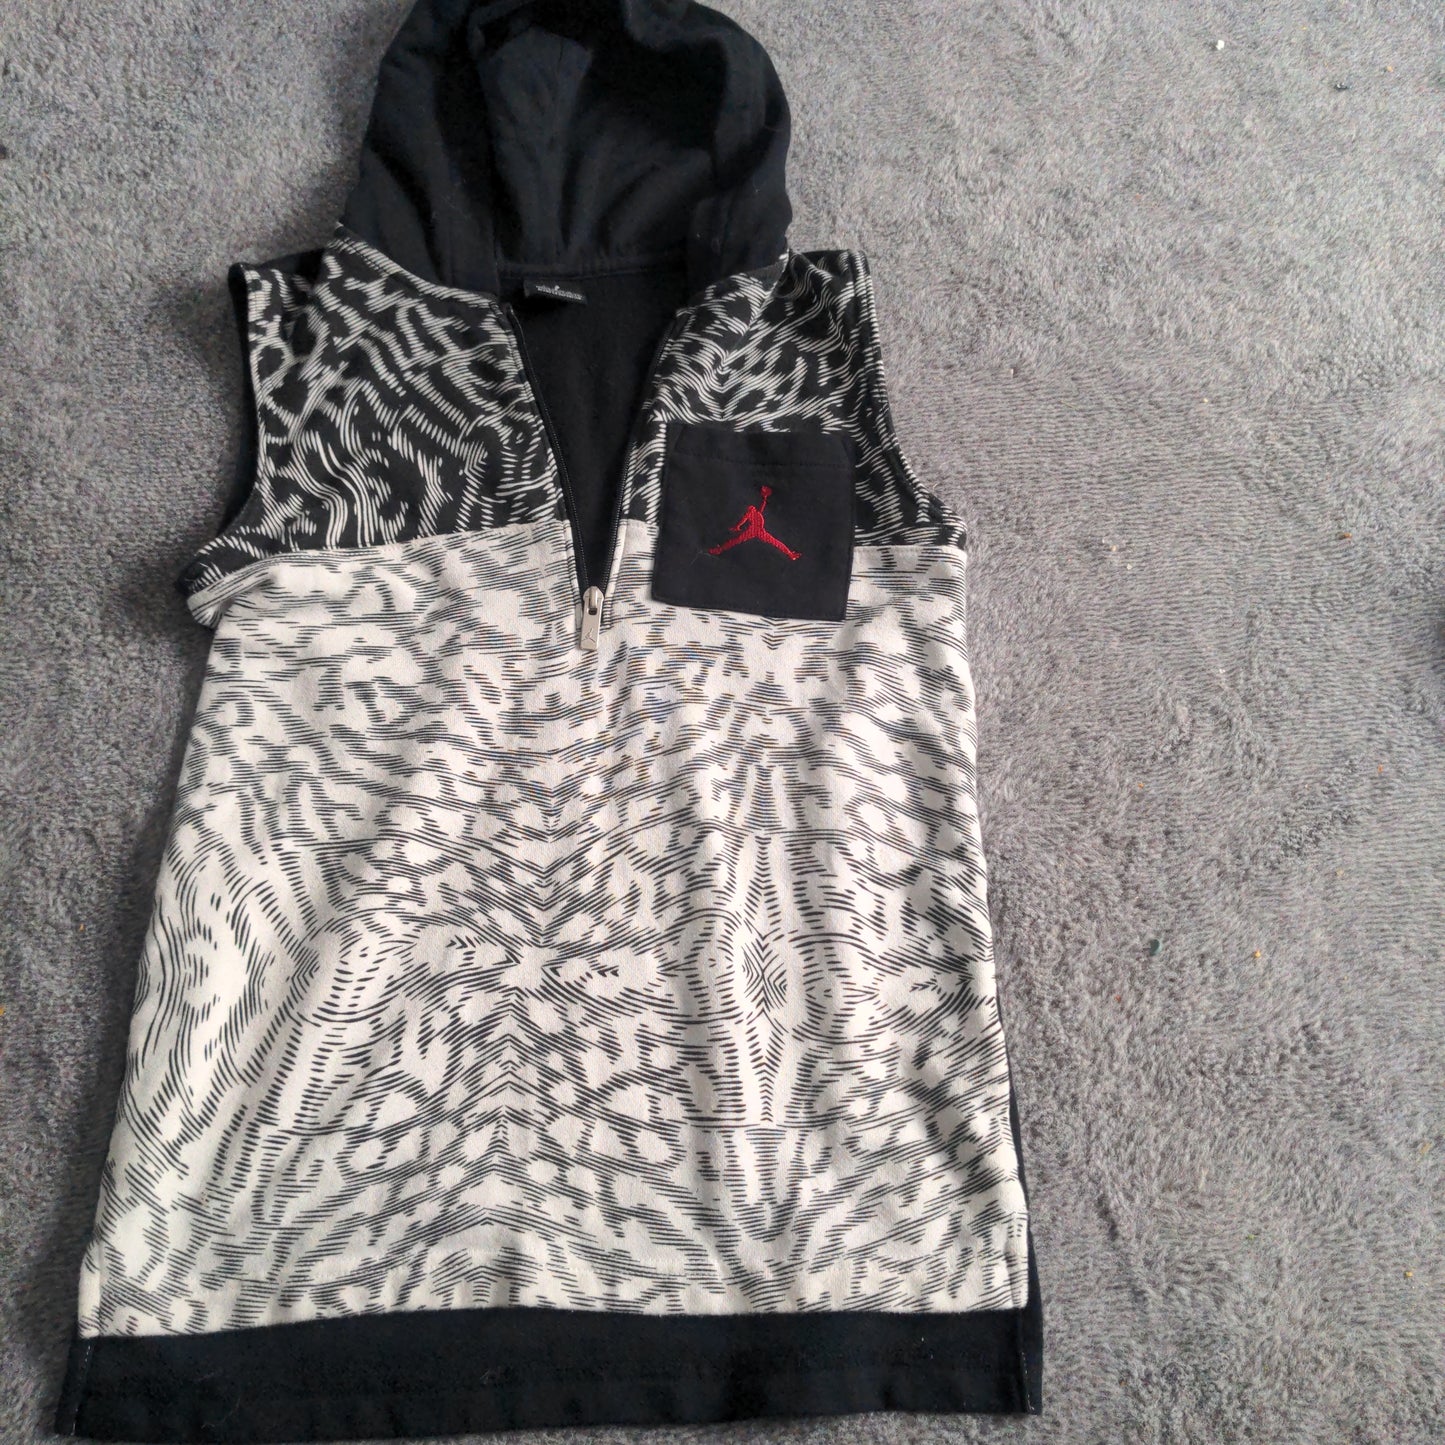 Jordan sleeveless hoodie size 10/12